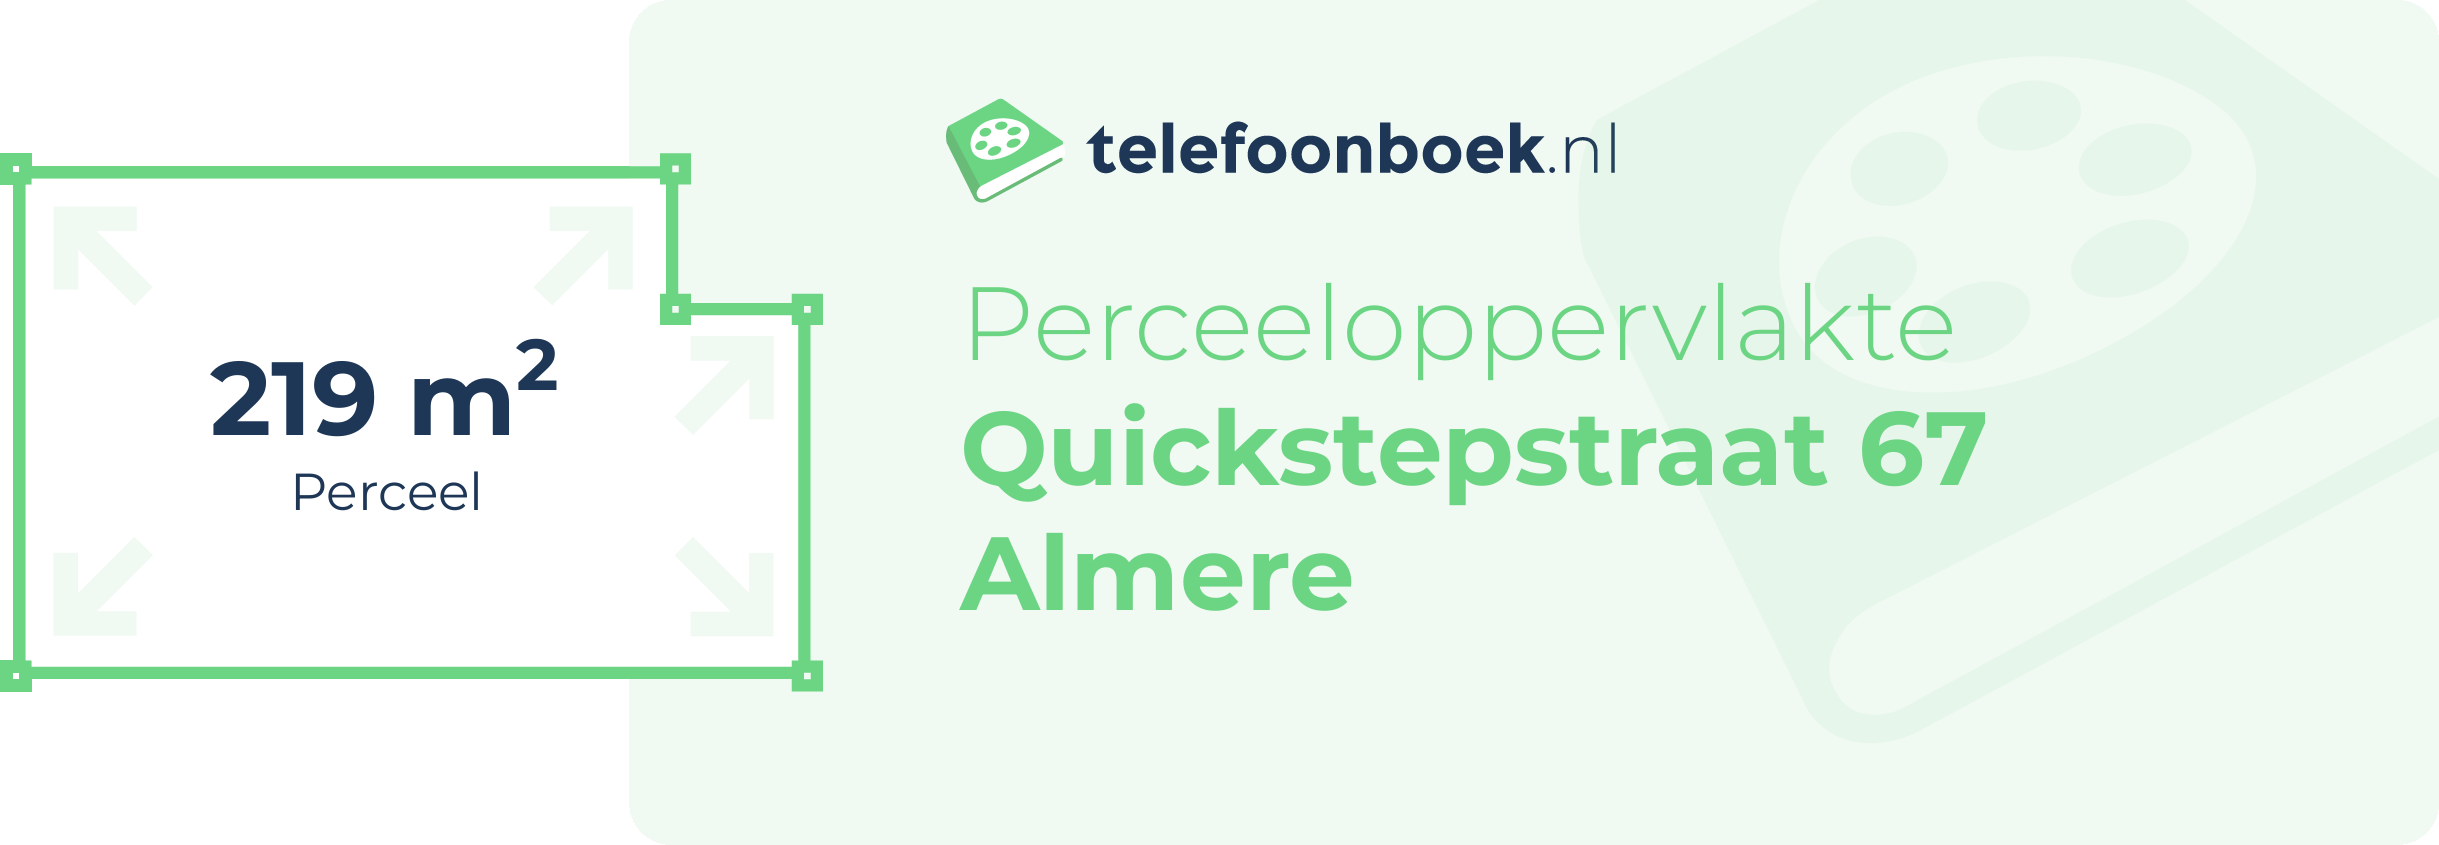 Perceeloppervlakte Quickstepstraat 67 Almere